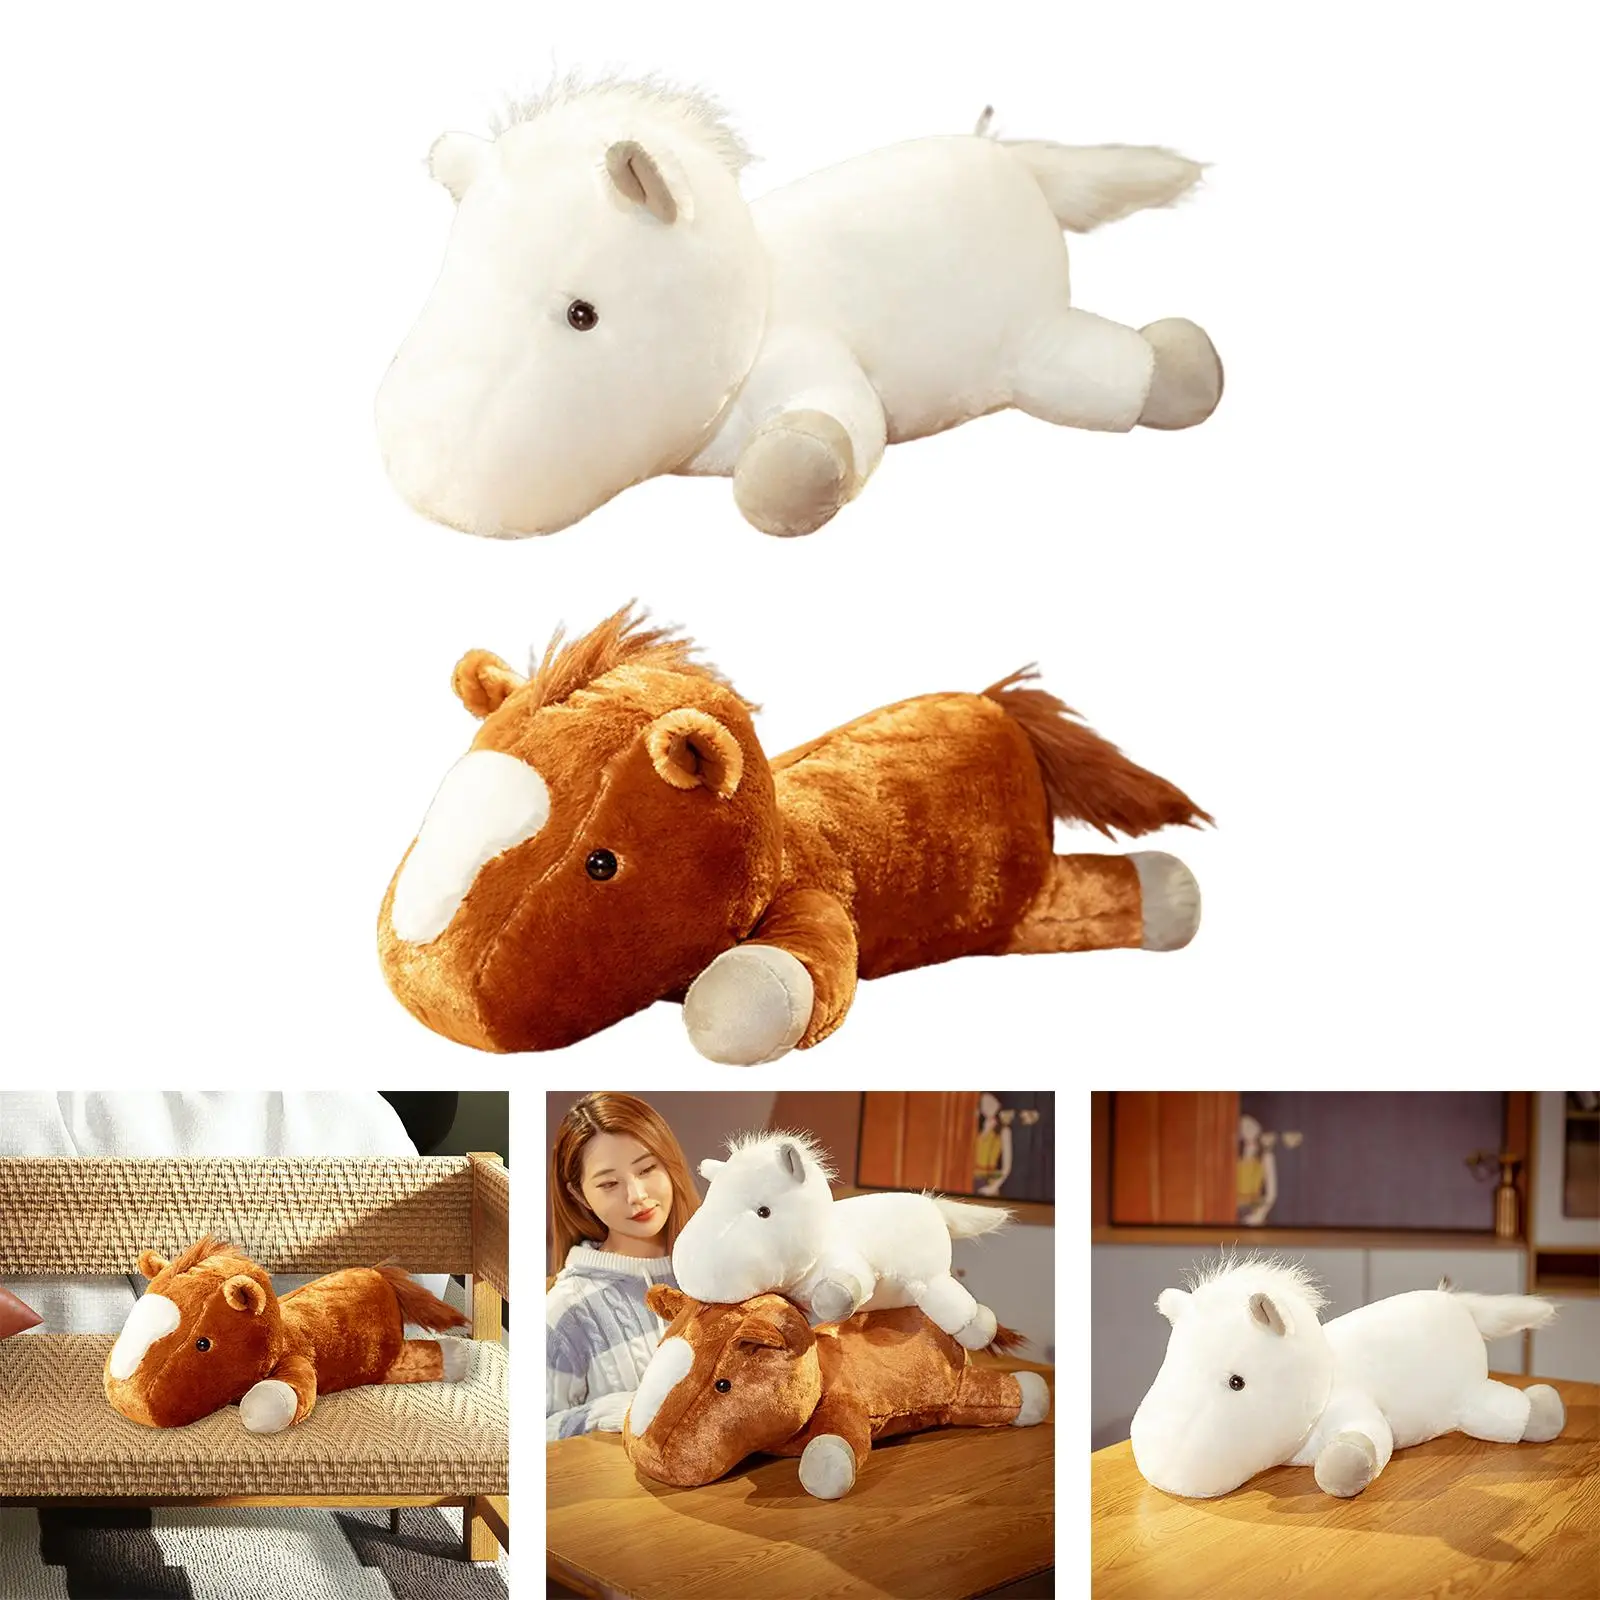 Soft Horse Plush Stuffed Animal Sleeping Pillow Horse for Home Bedroom Decor